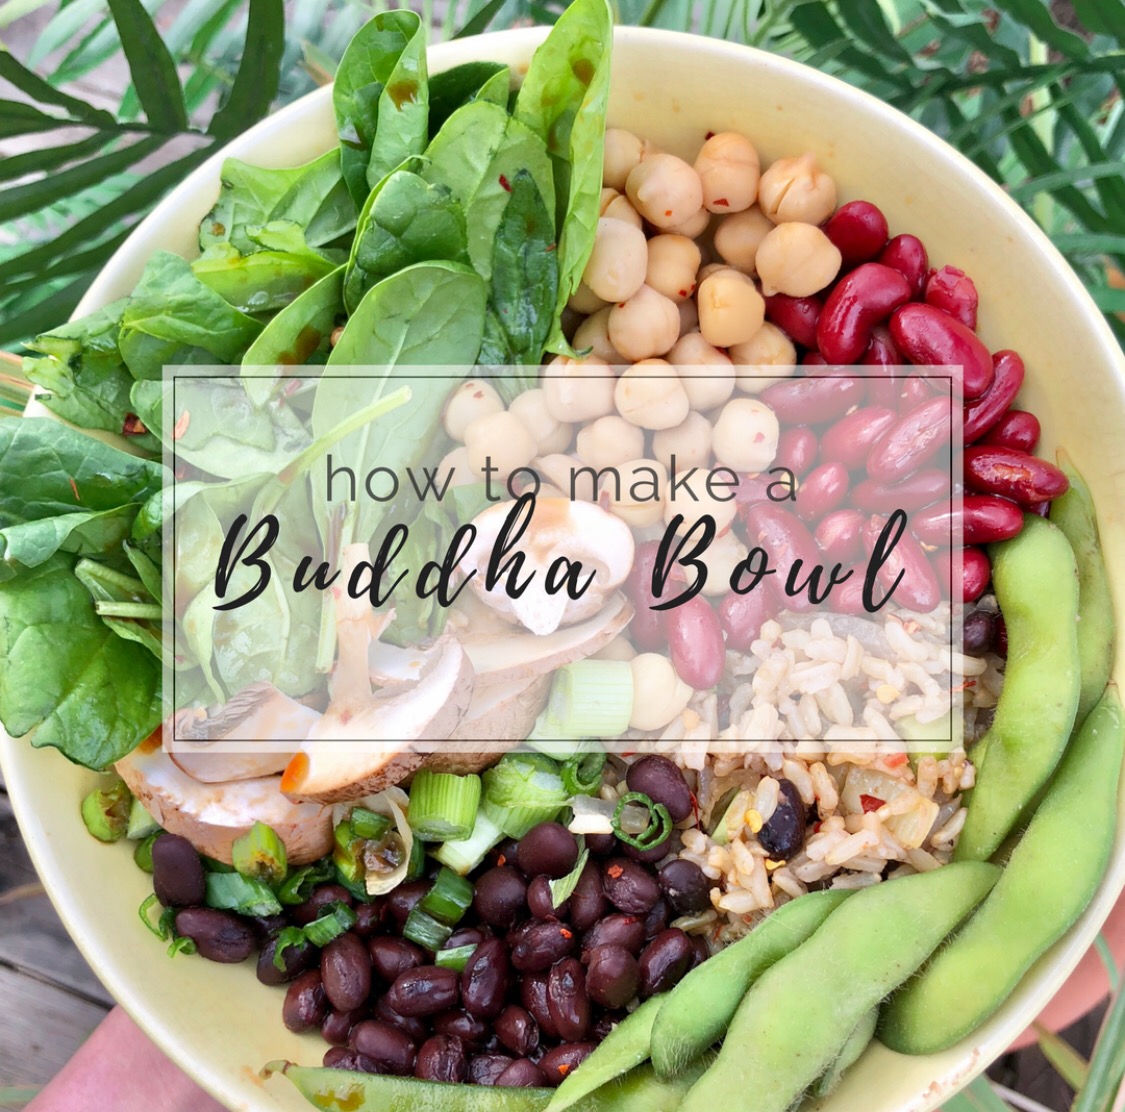 How To Make A Buddha Bowl